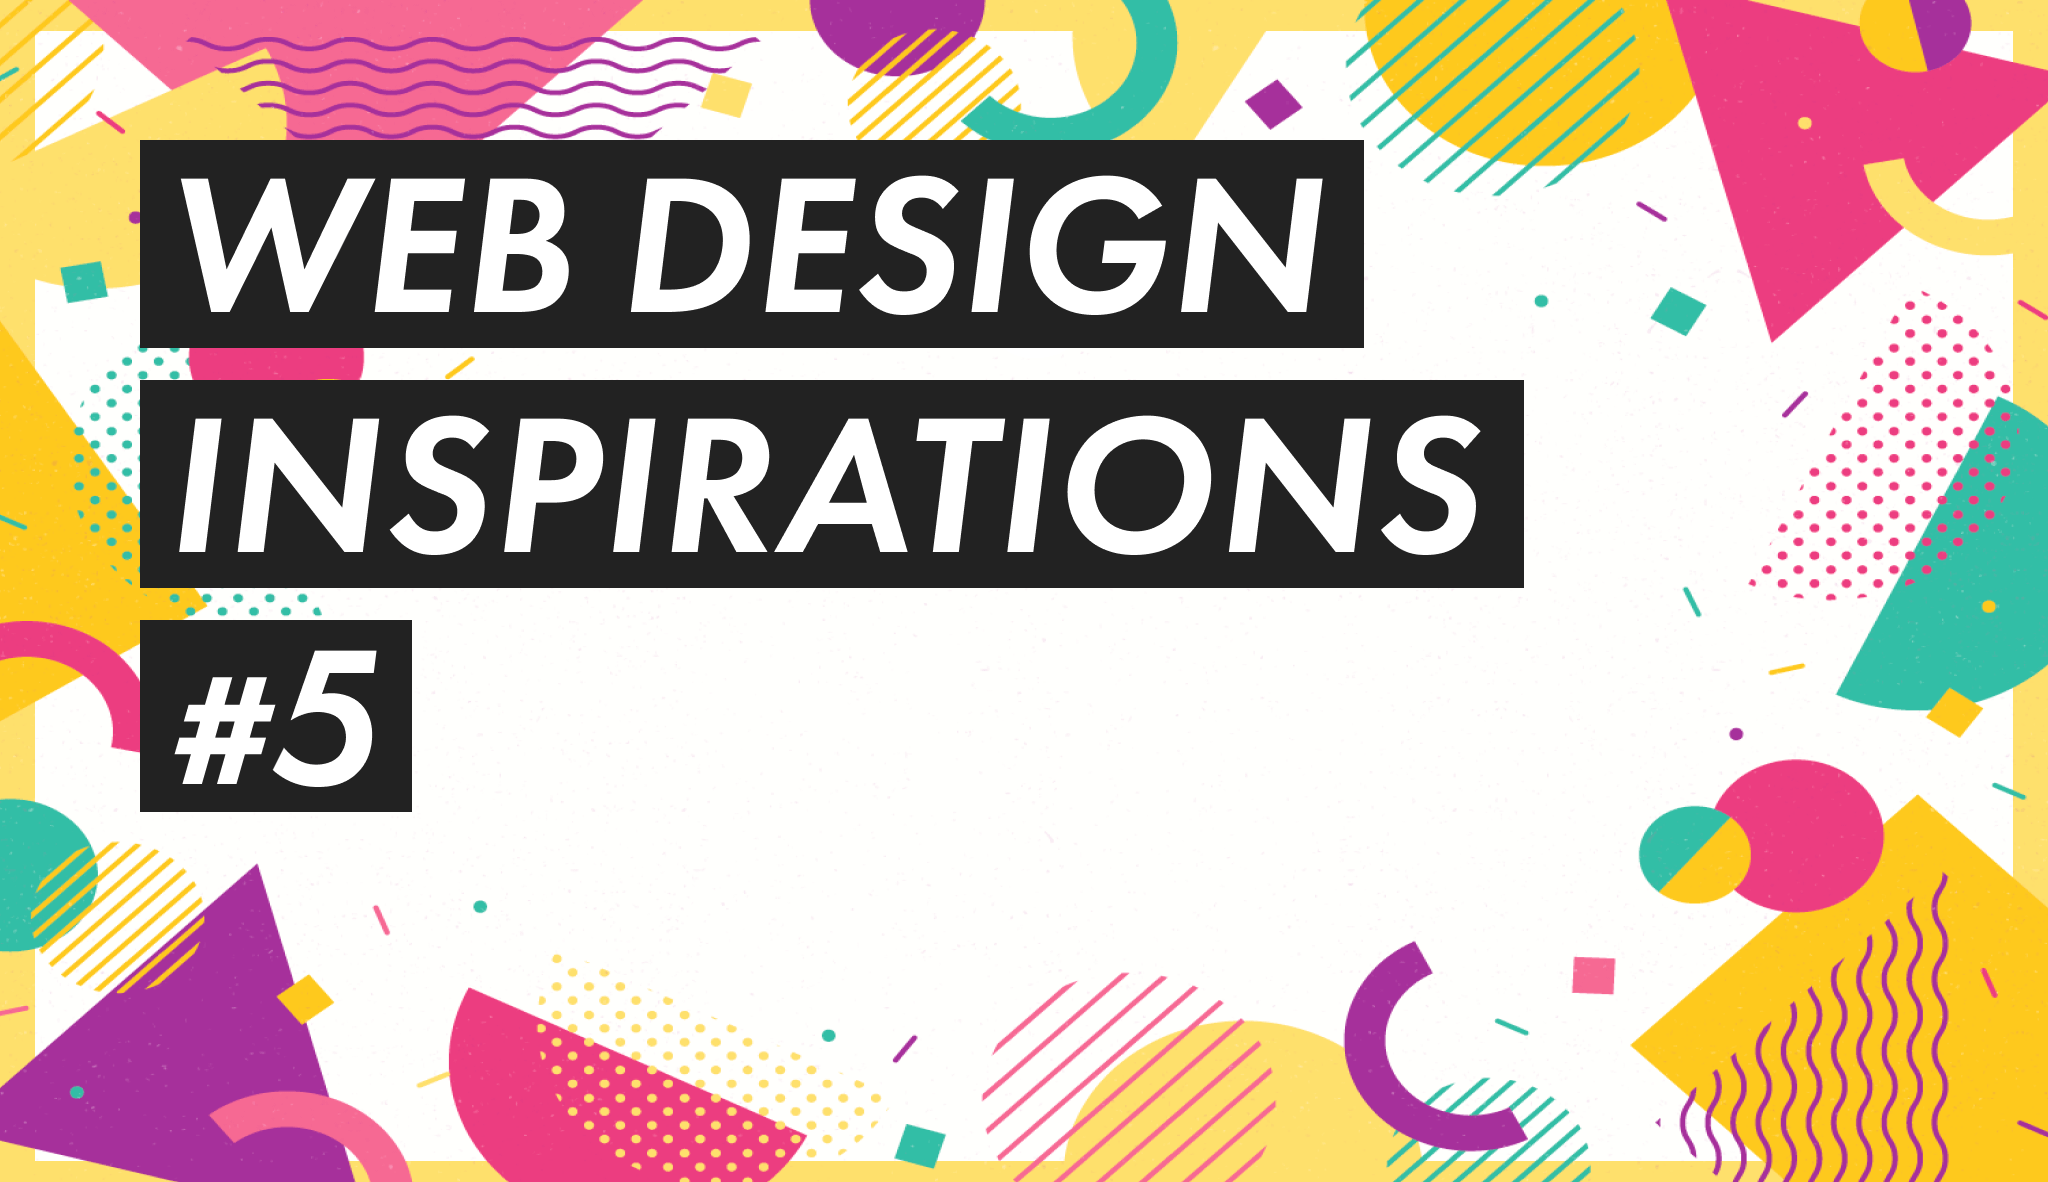 Web Design Inspirations #5